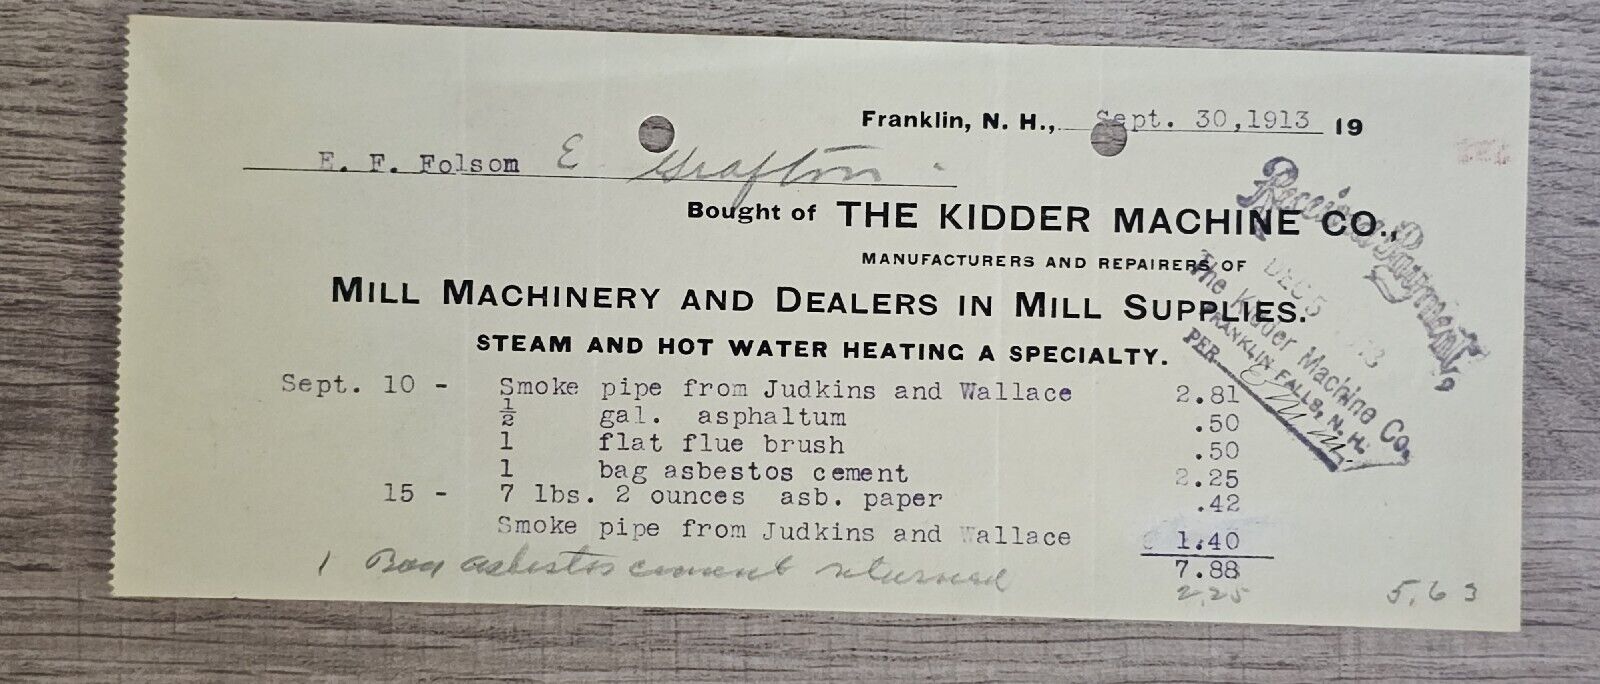 1919  Kidder Machine Co Mill Machinery & Supplies Billhead Receipt Franklin, NH